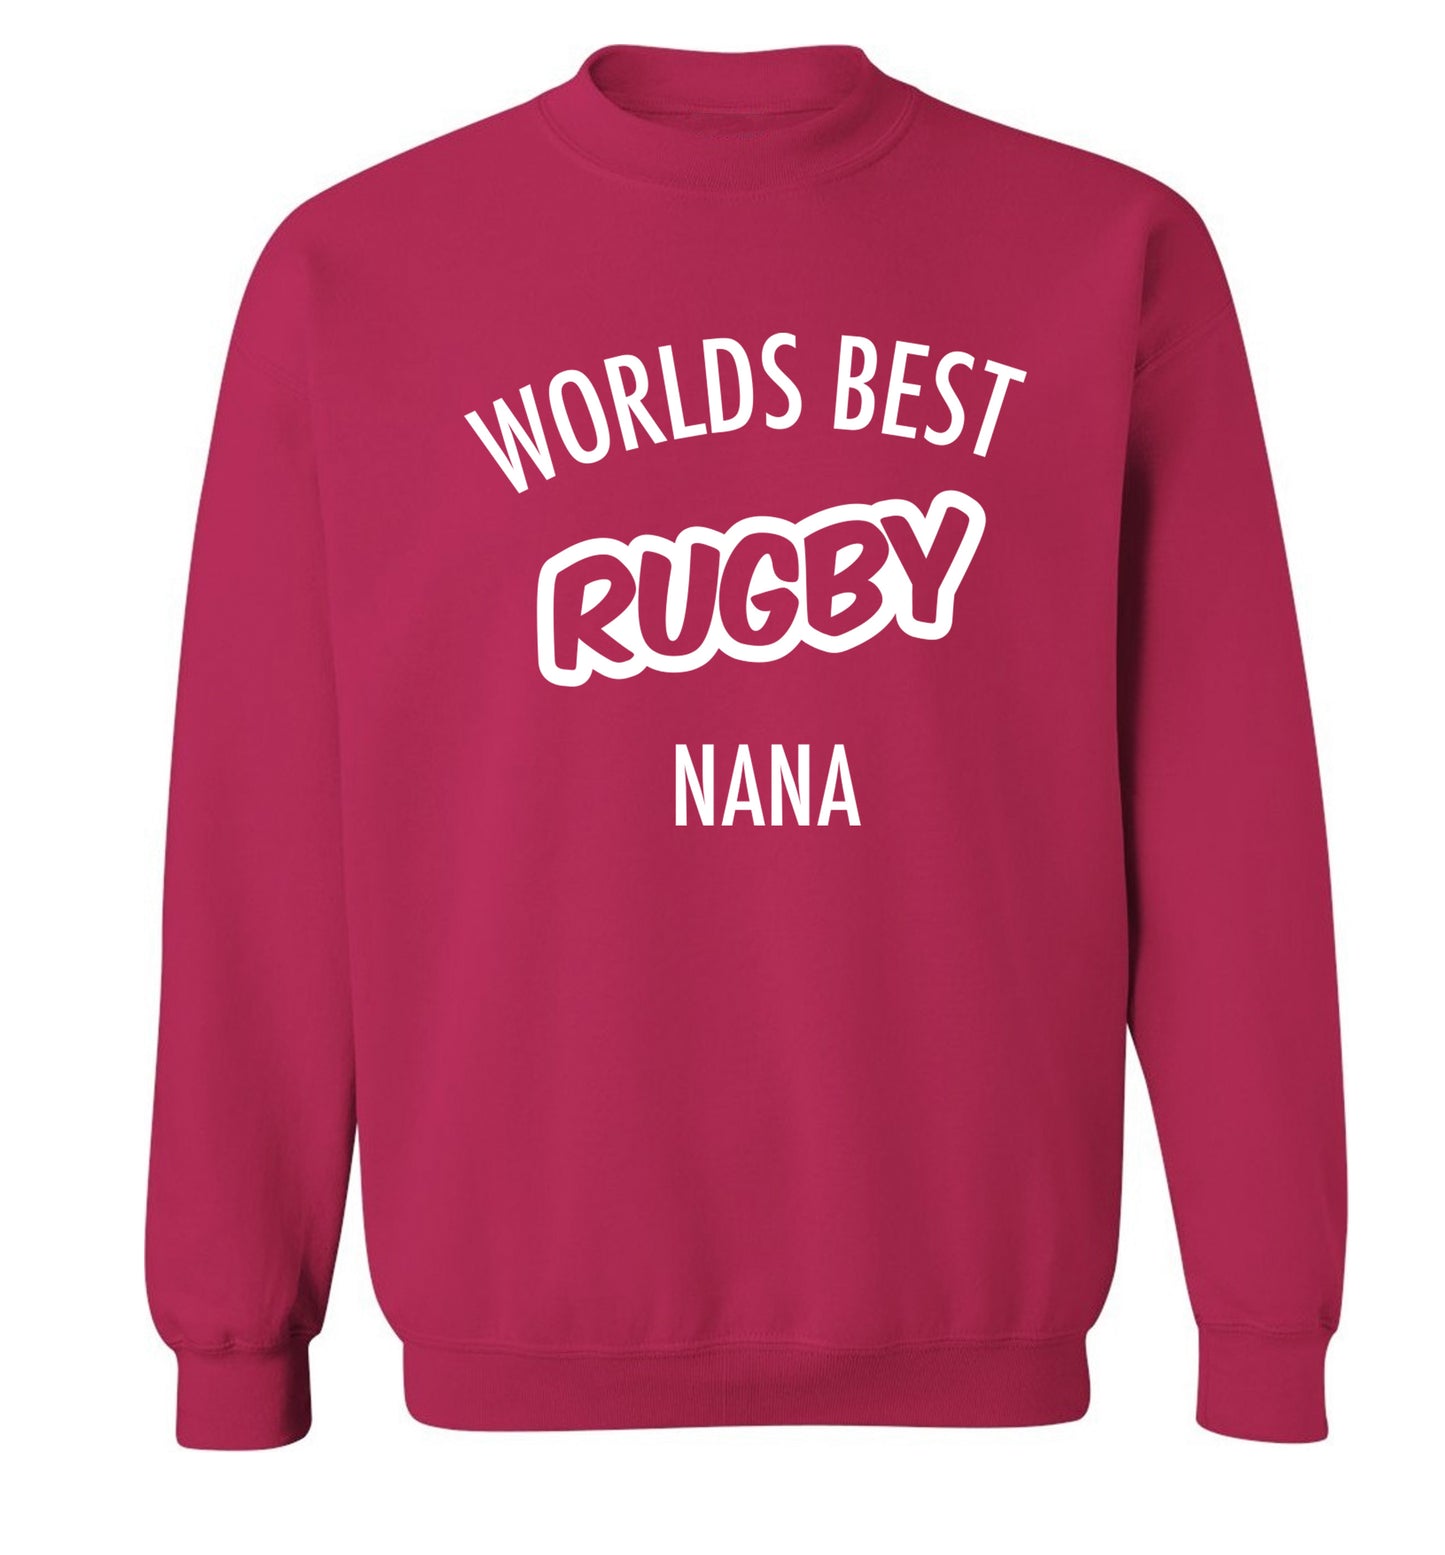 Worlds Best Rugby Grandma Adult's unisex pink Sweater 2XL